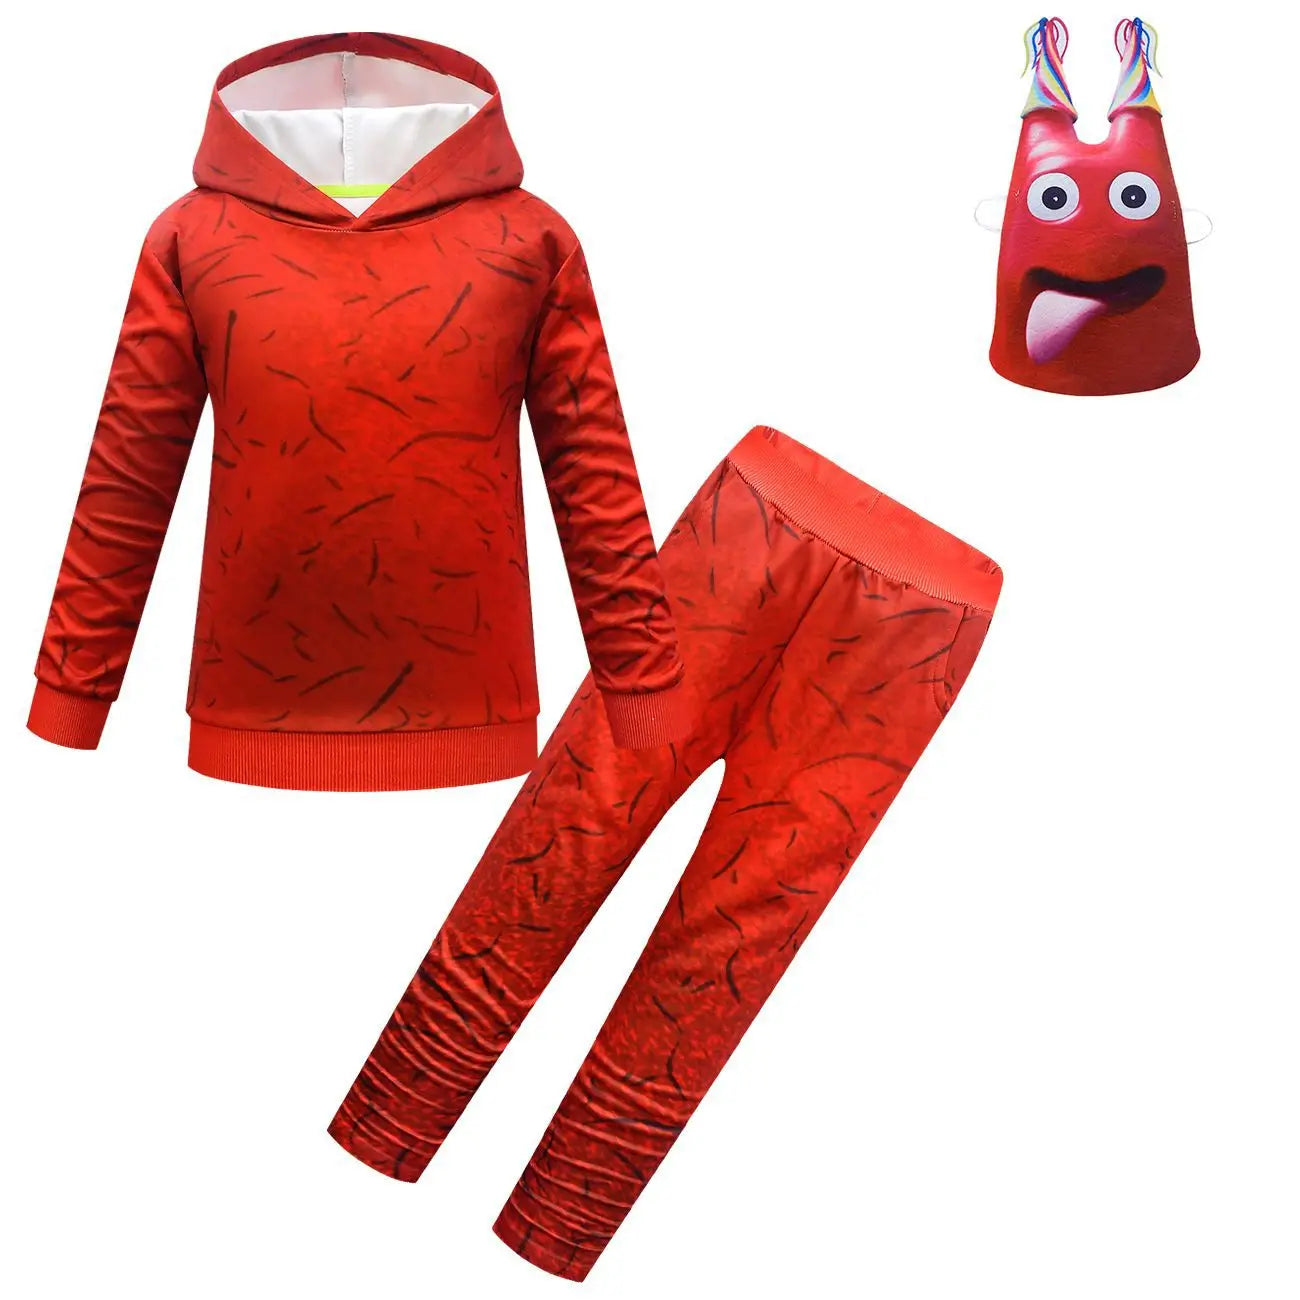 Garten of Banban Costume - Fire Demon Game Doll Cosplay Clothing, Includes Flynn Steve Nabnabr Jumbo Josh Peluche Kids Hoodie, Pants, and Mask-5227 6026 mask-110cm-